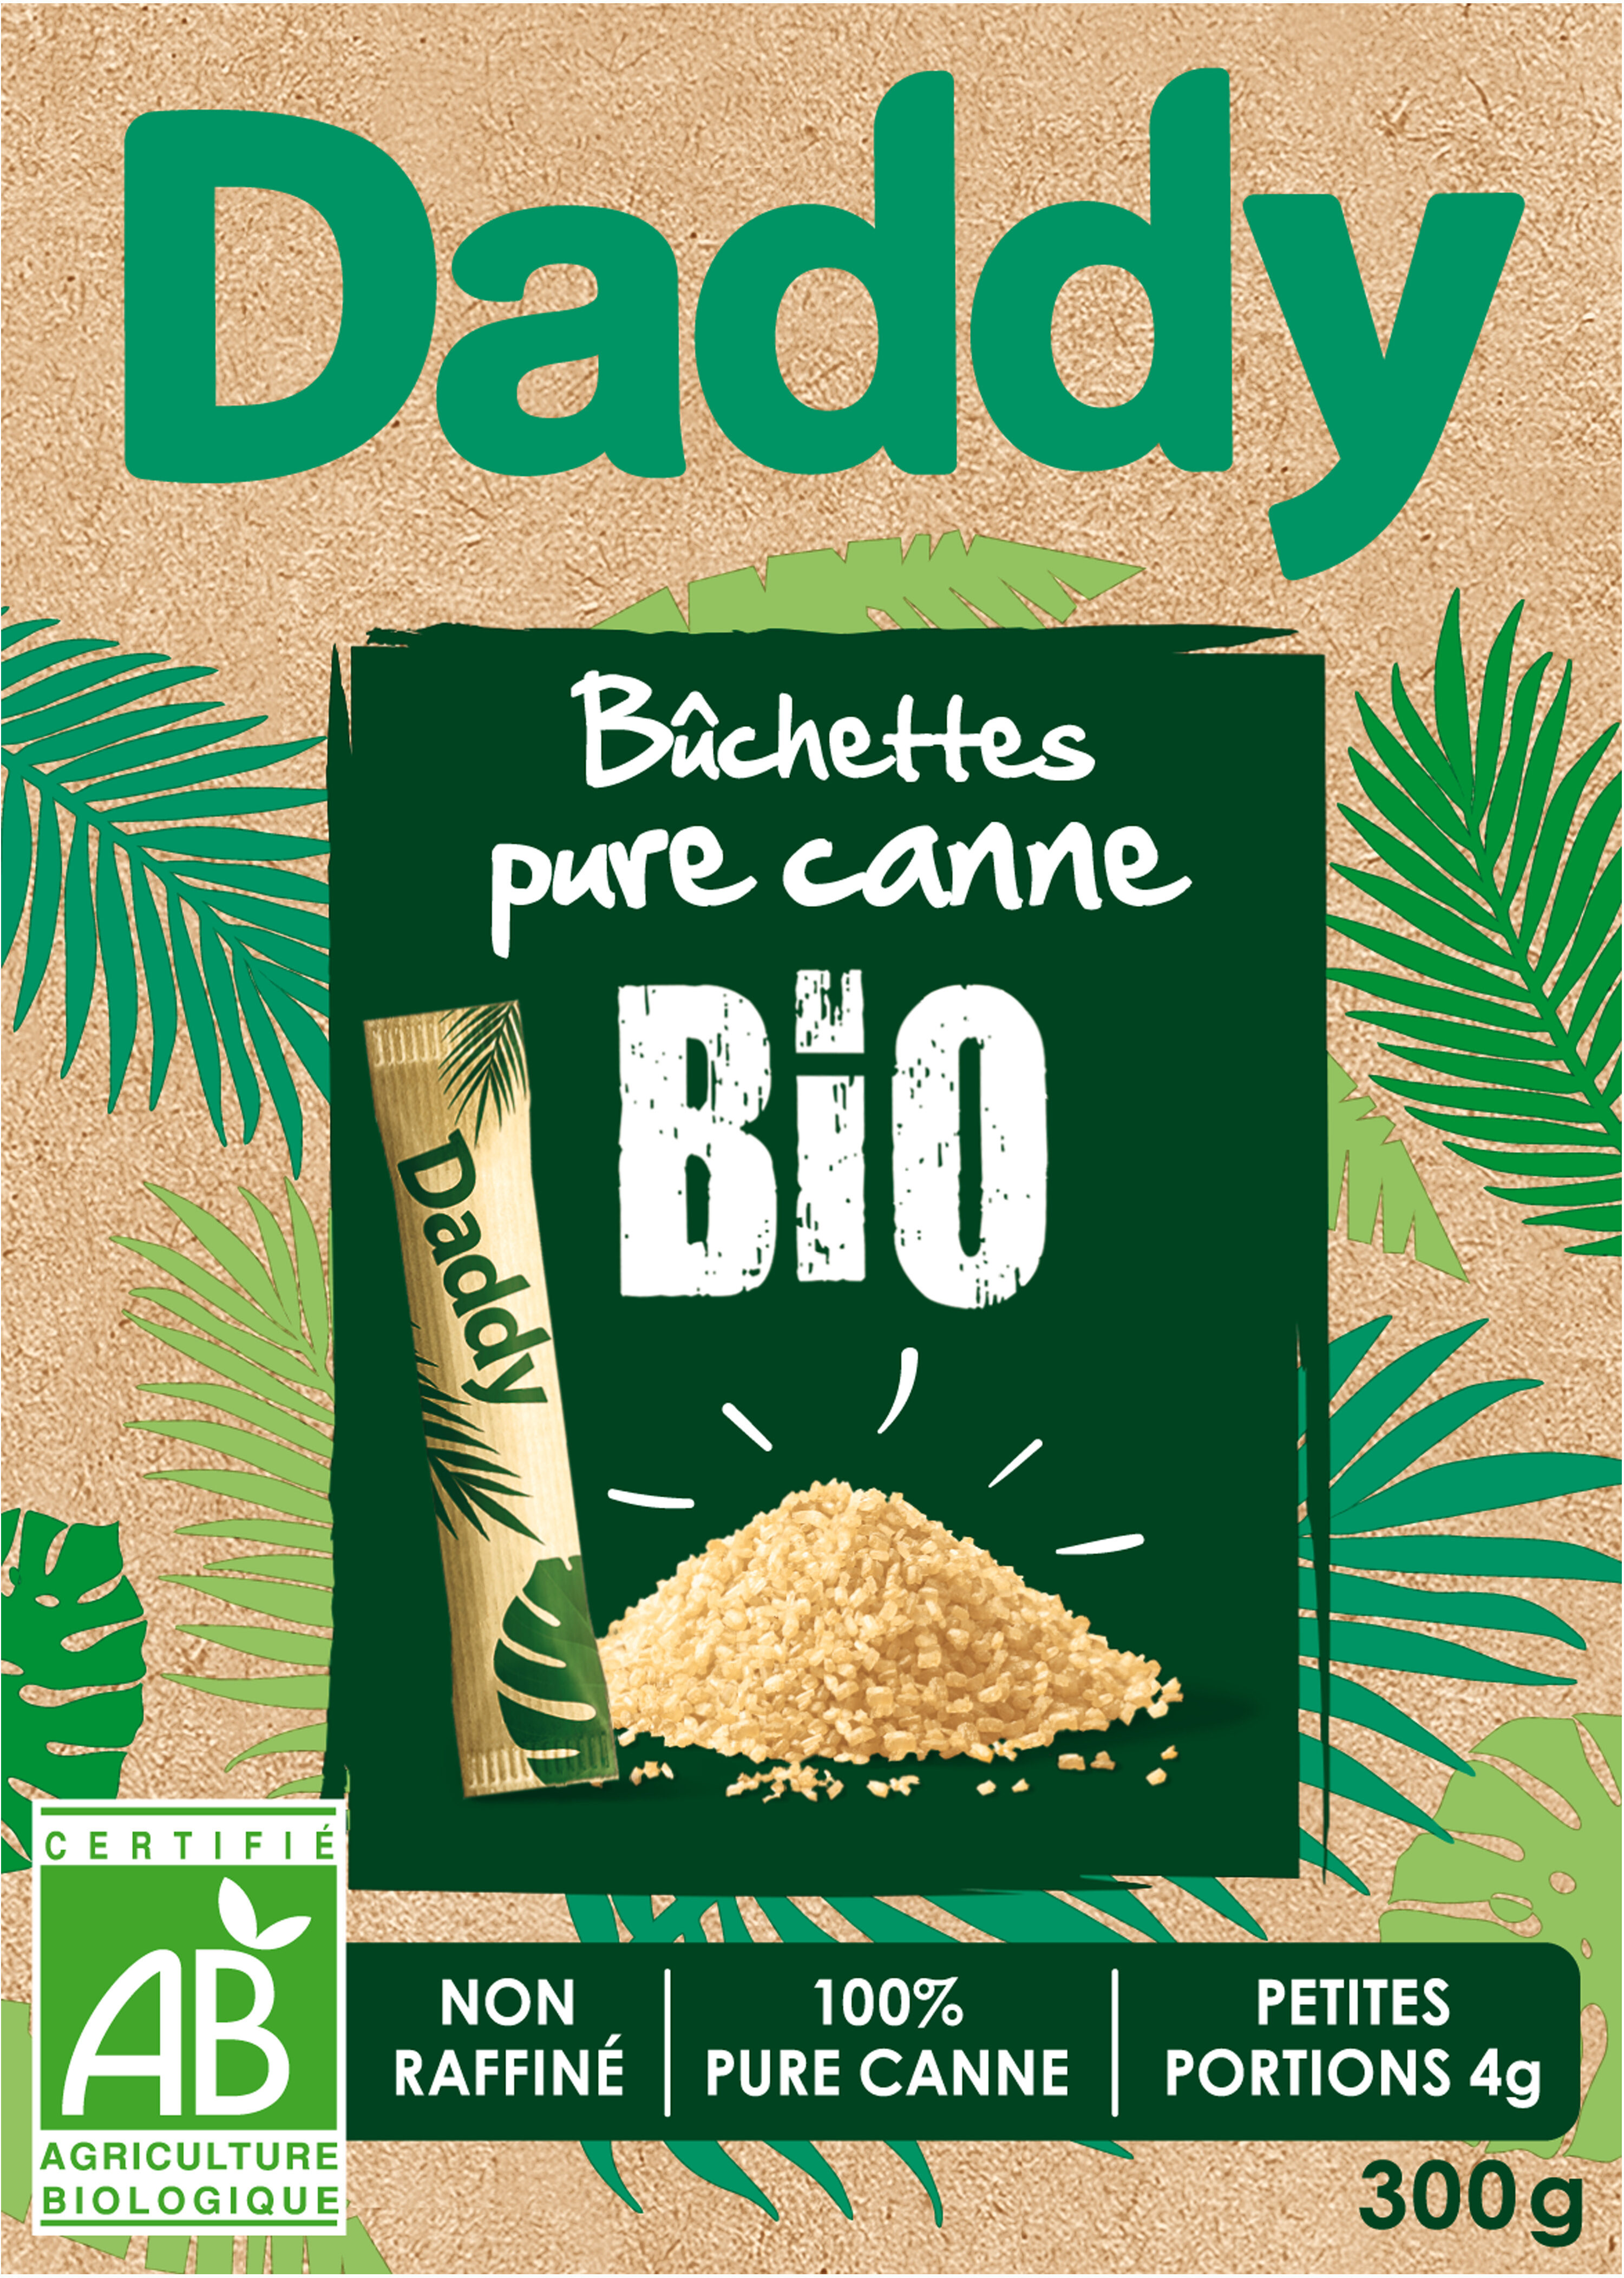 Boite de bûchettes 4g canne blond bio daddy 300g - Produit